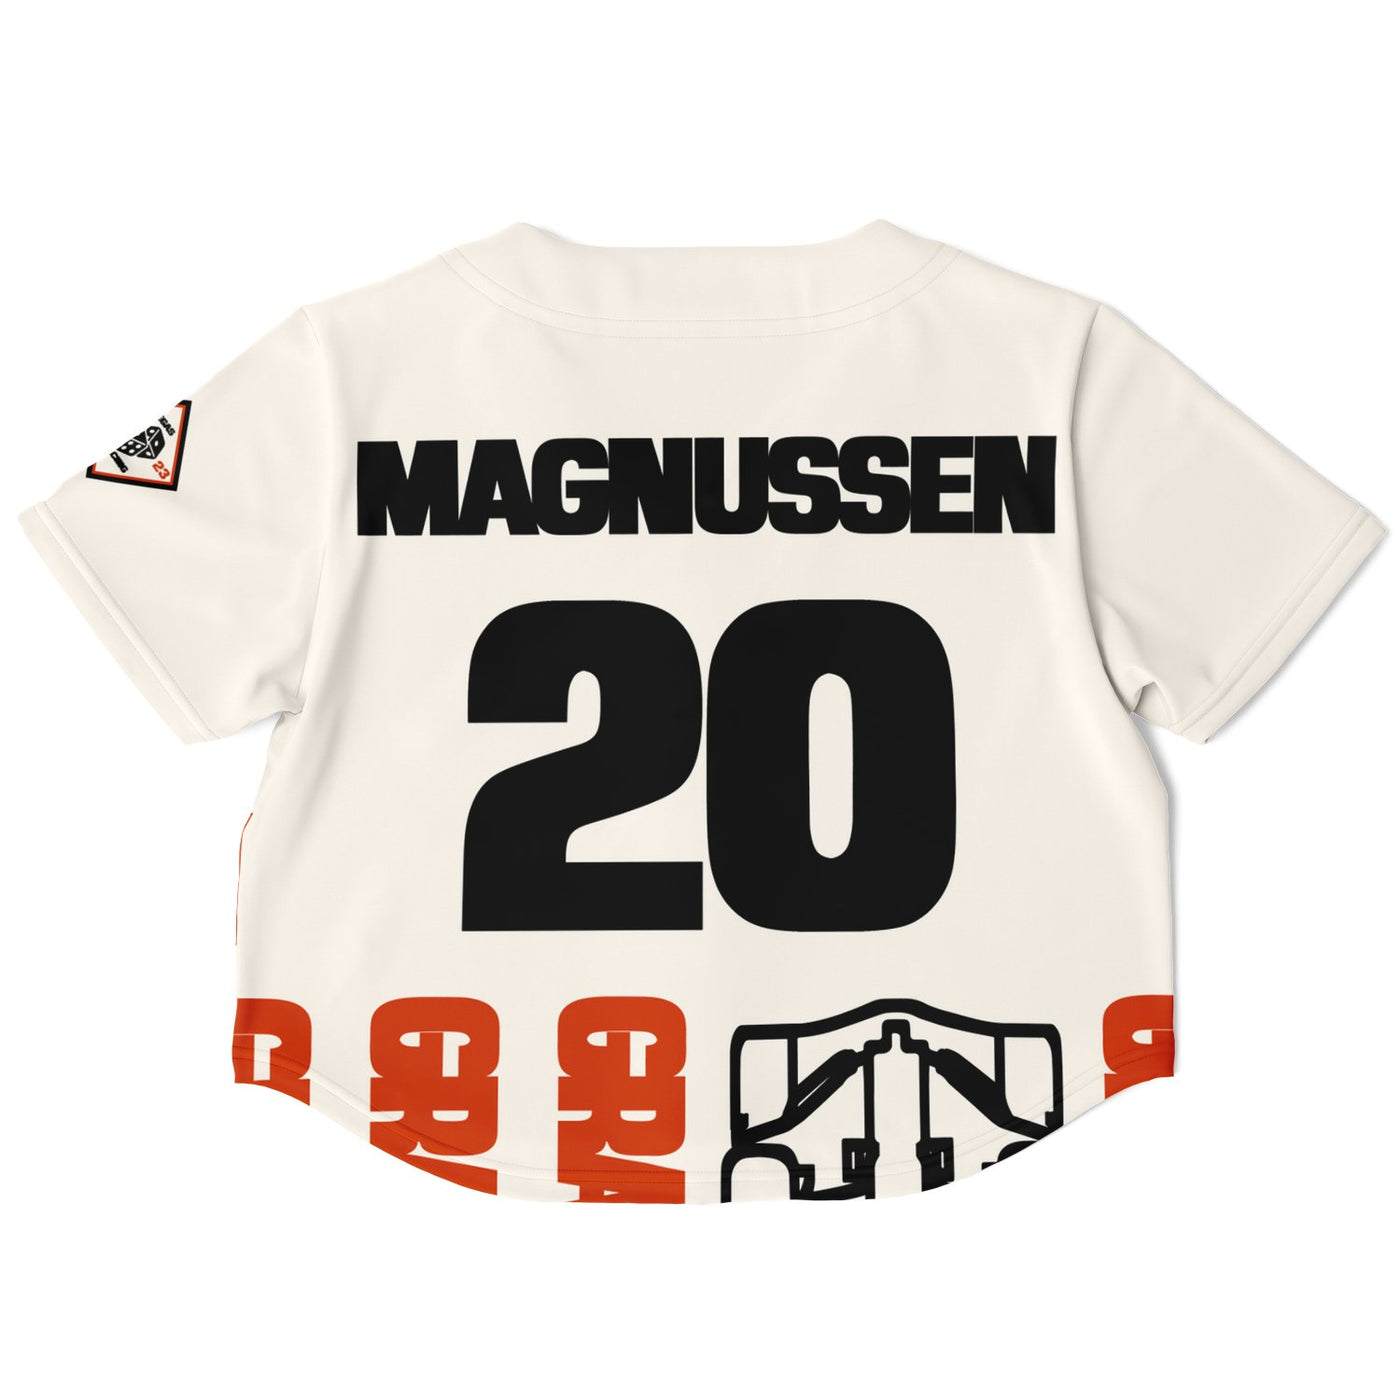 Magnussen - Vegas Street Circuit Crop Top (Clearance) - Furious Motorsport